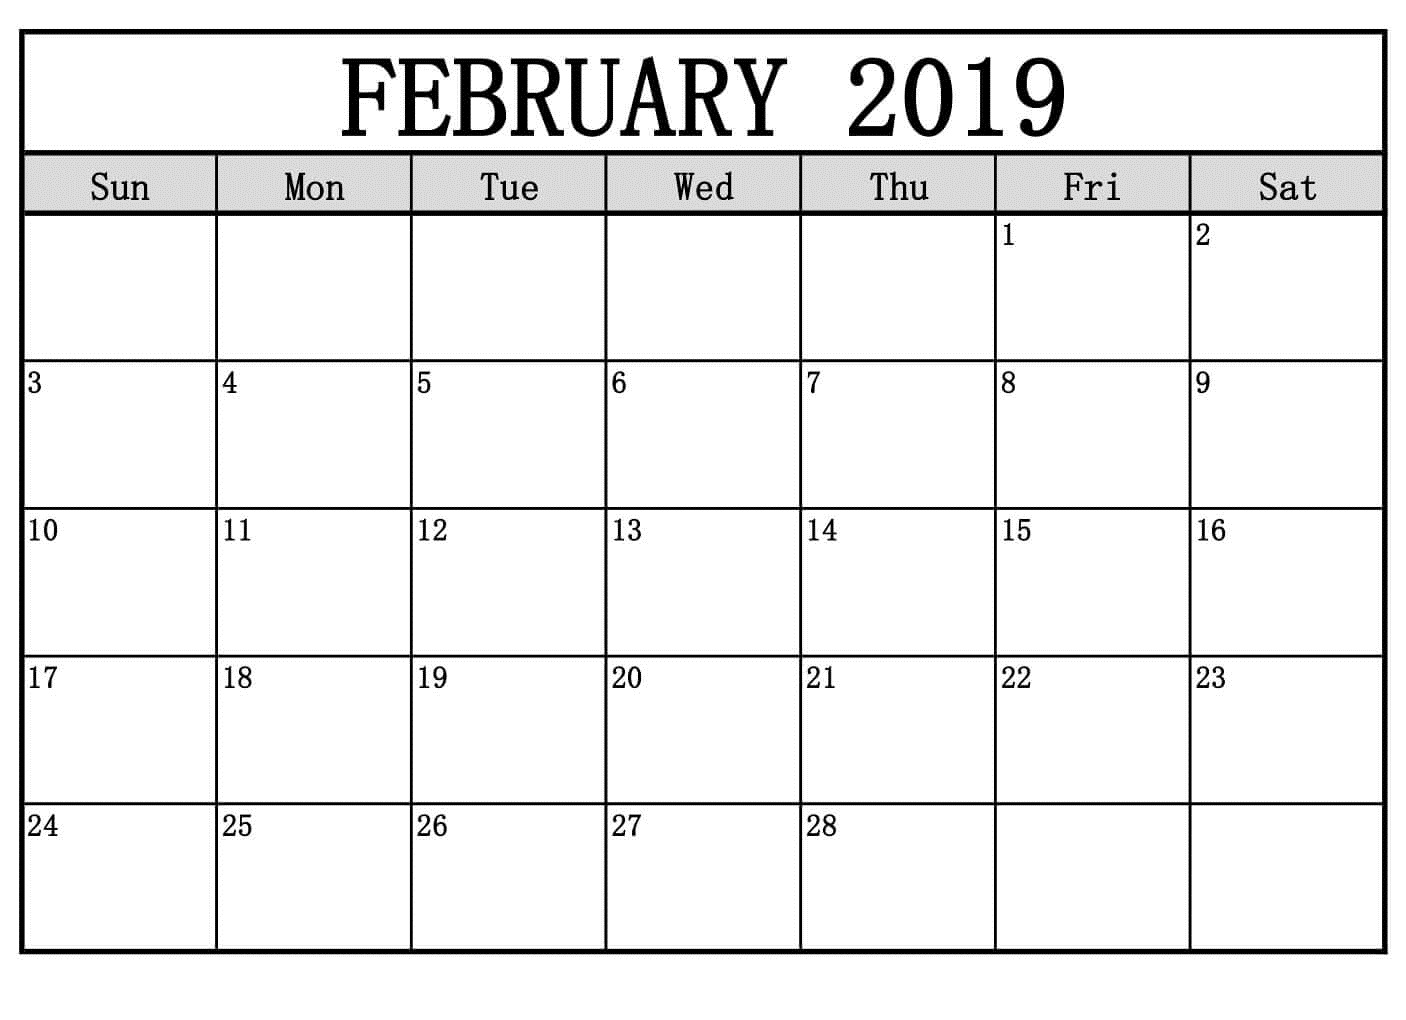 February 2019 Calendar Large Print